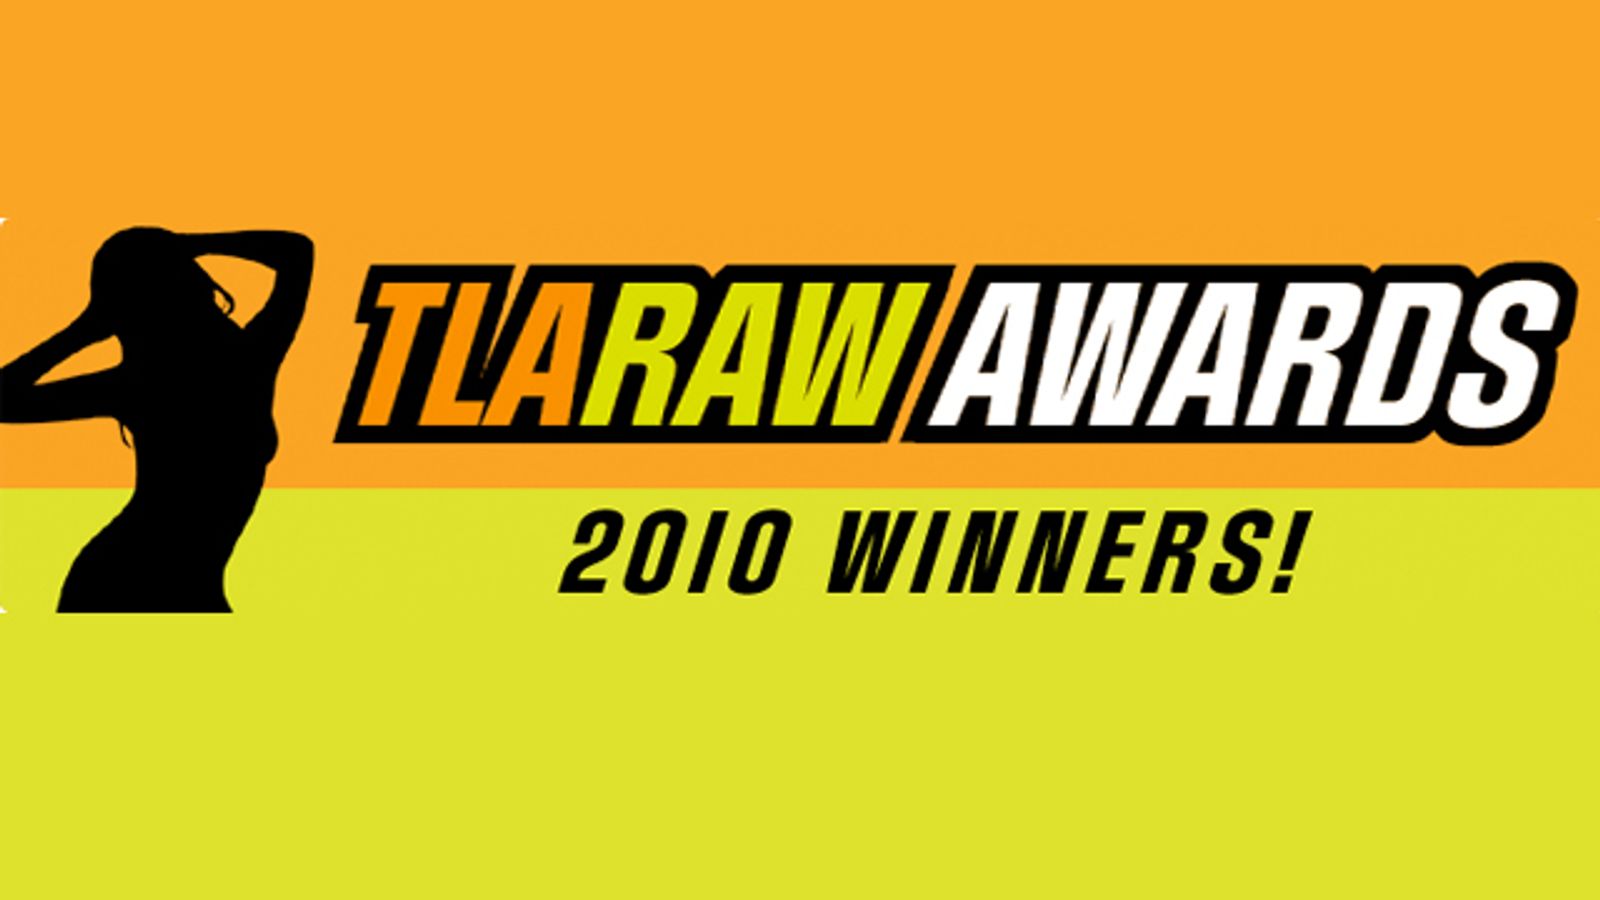 TLARAW.com Announces 2010 Raw Award Winners